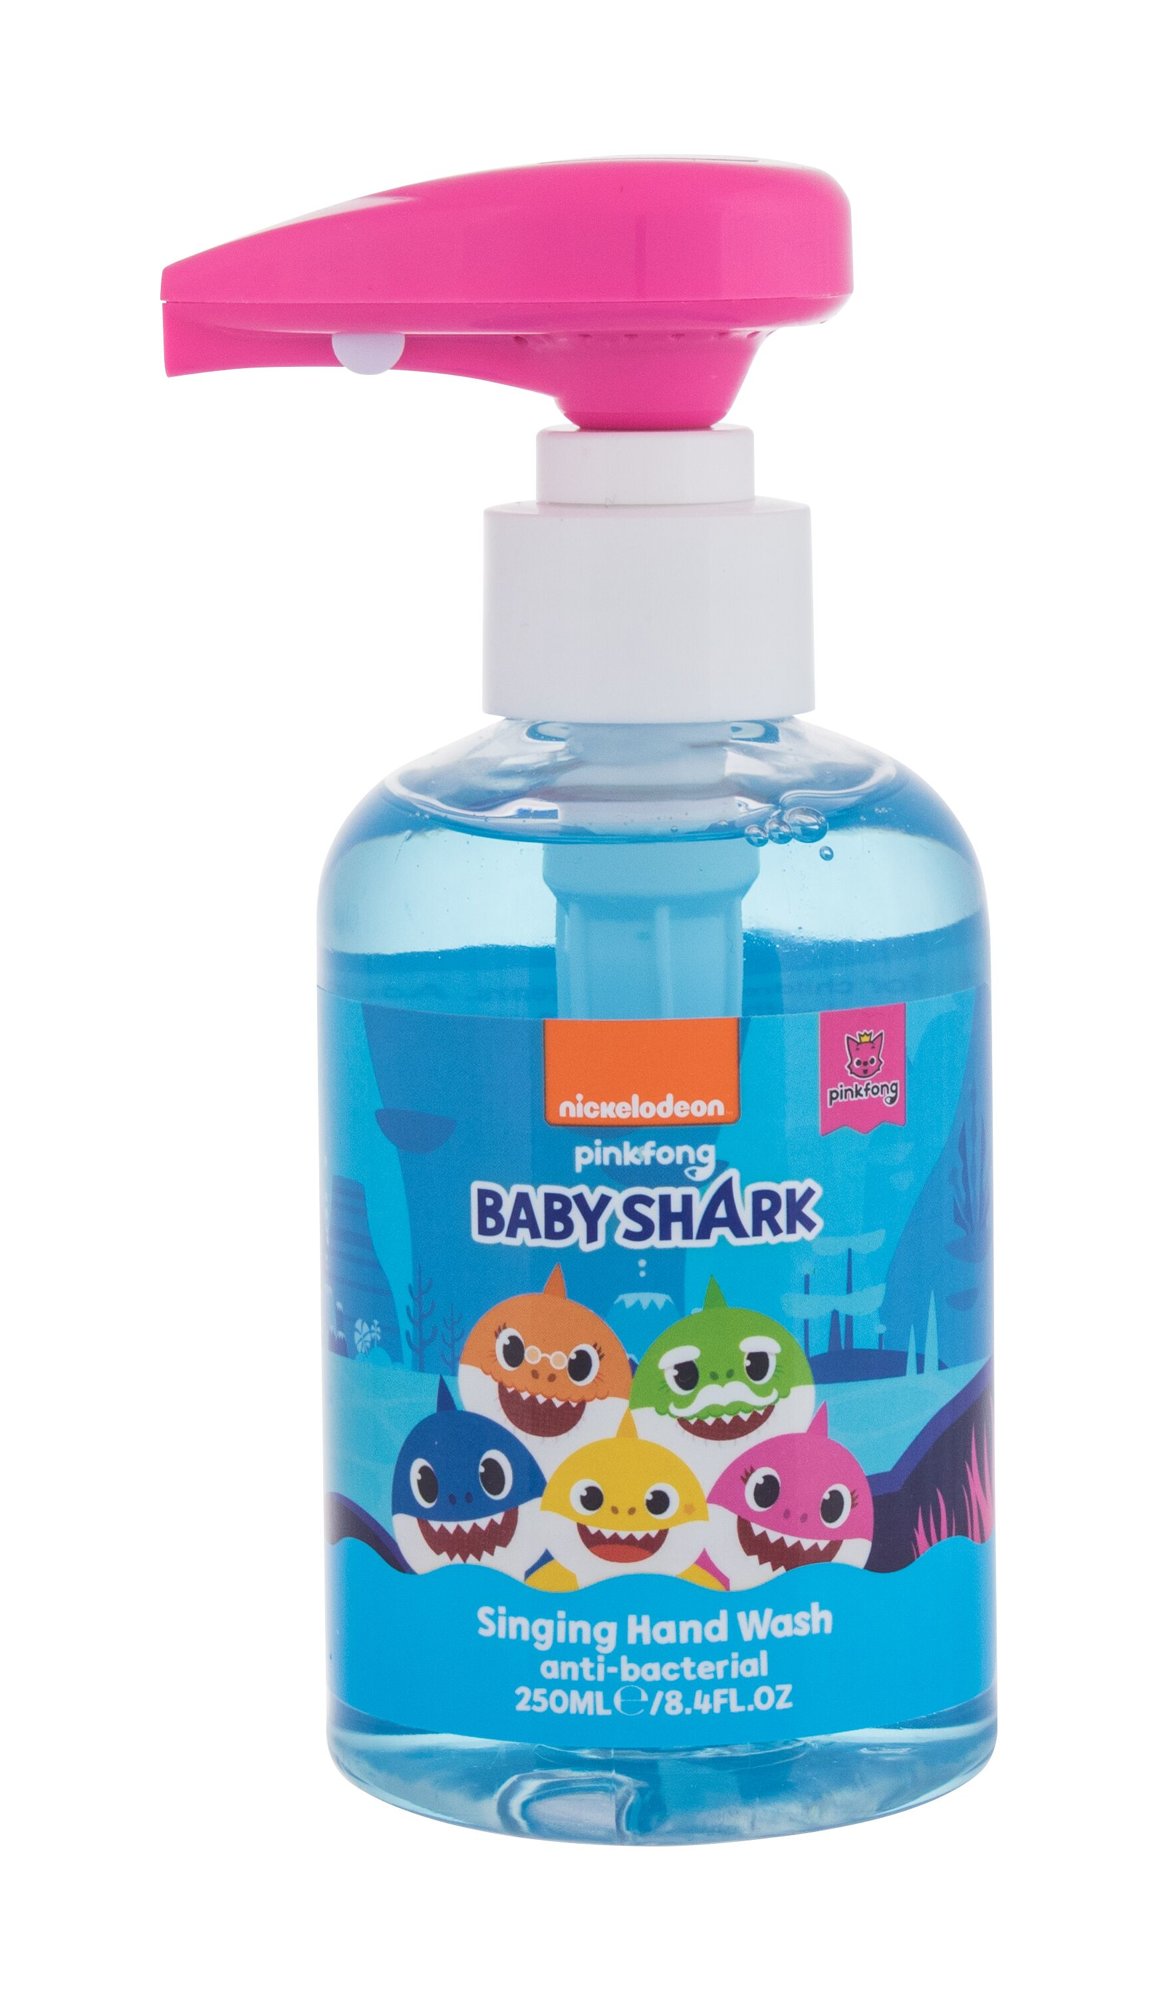 Pinkfong Baby Shark Anti-Bacterial Singing Hand Wash skystas muilas